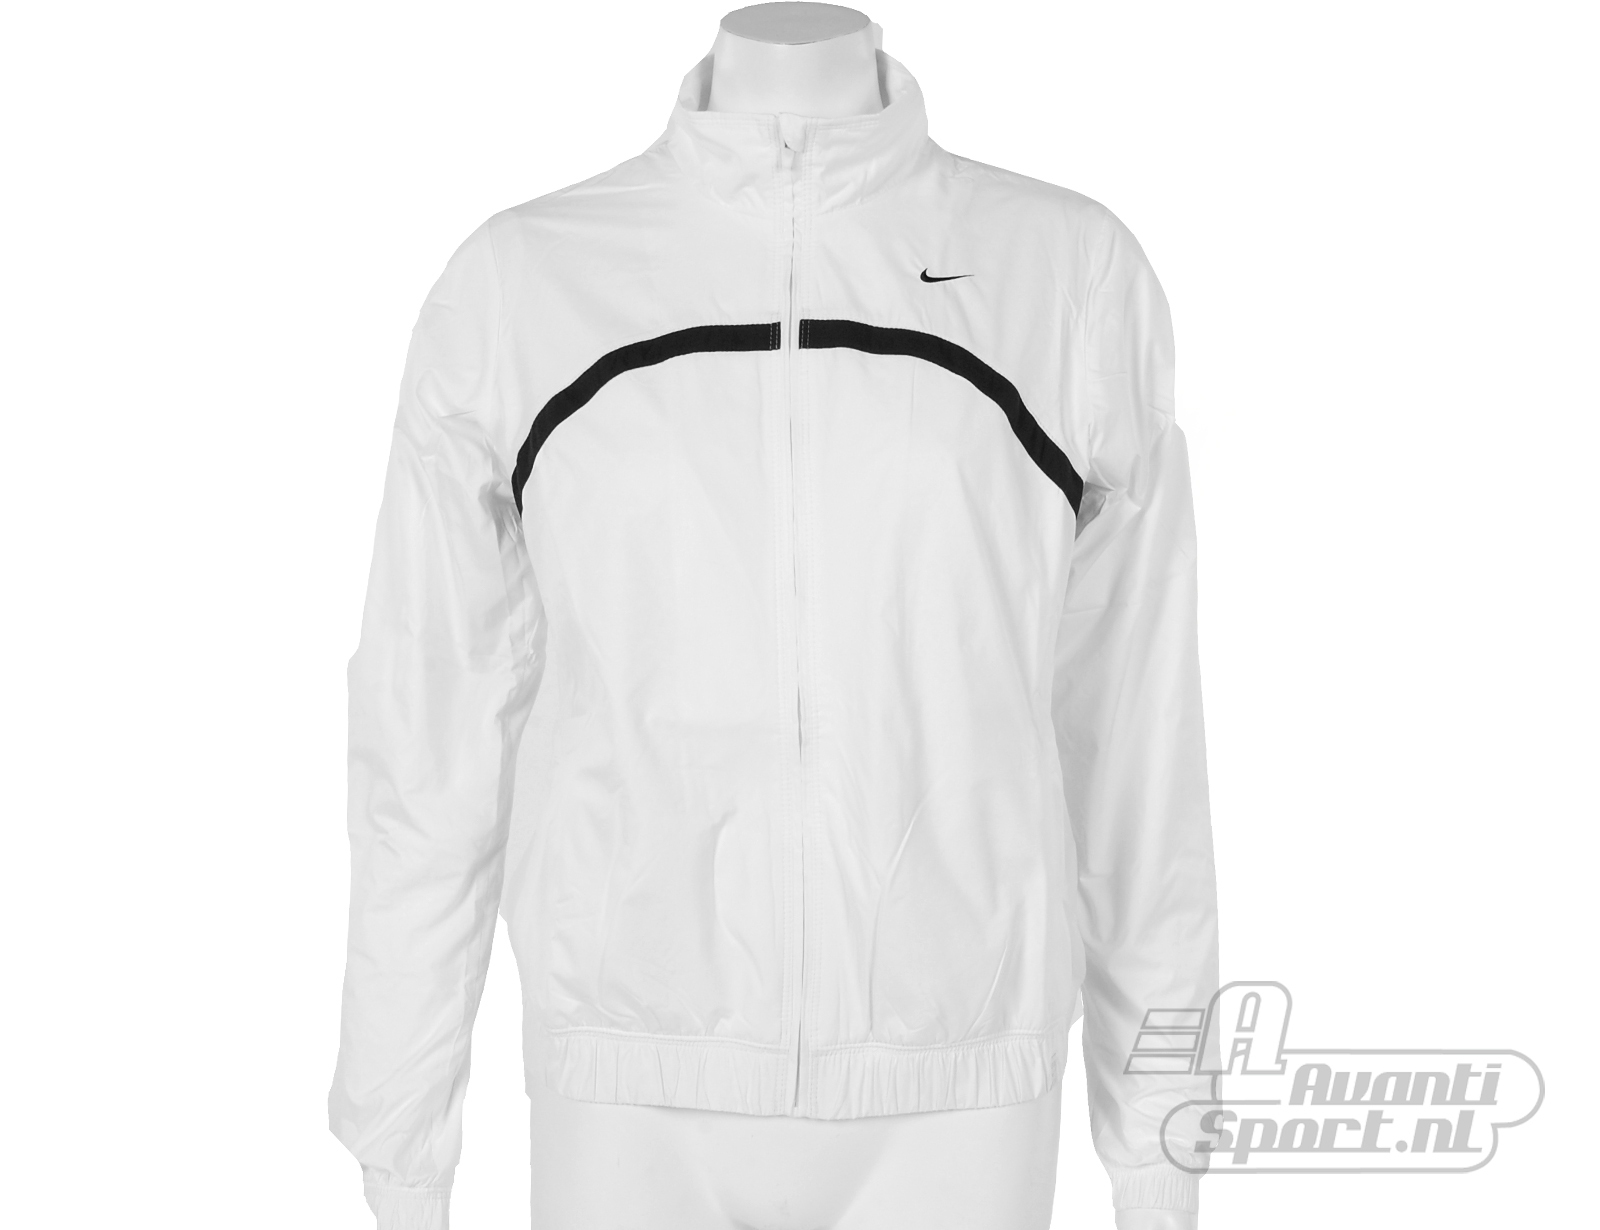 Avantisport - Nike - Border Woven Jacket - Nike Tennis Border Woven Jacket